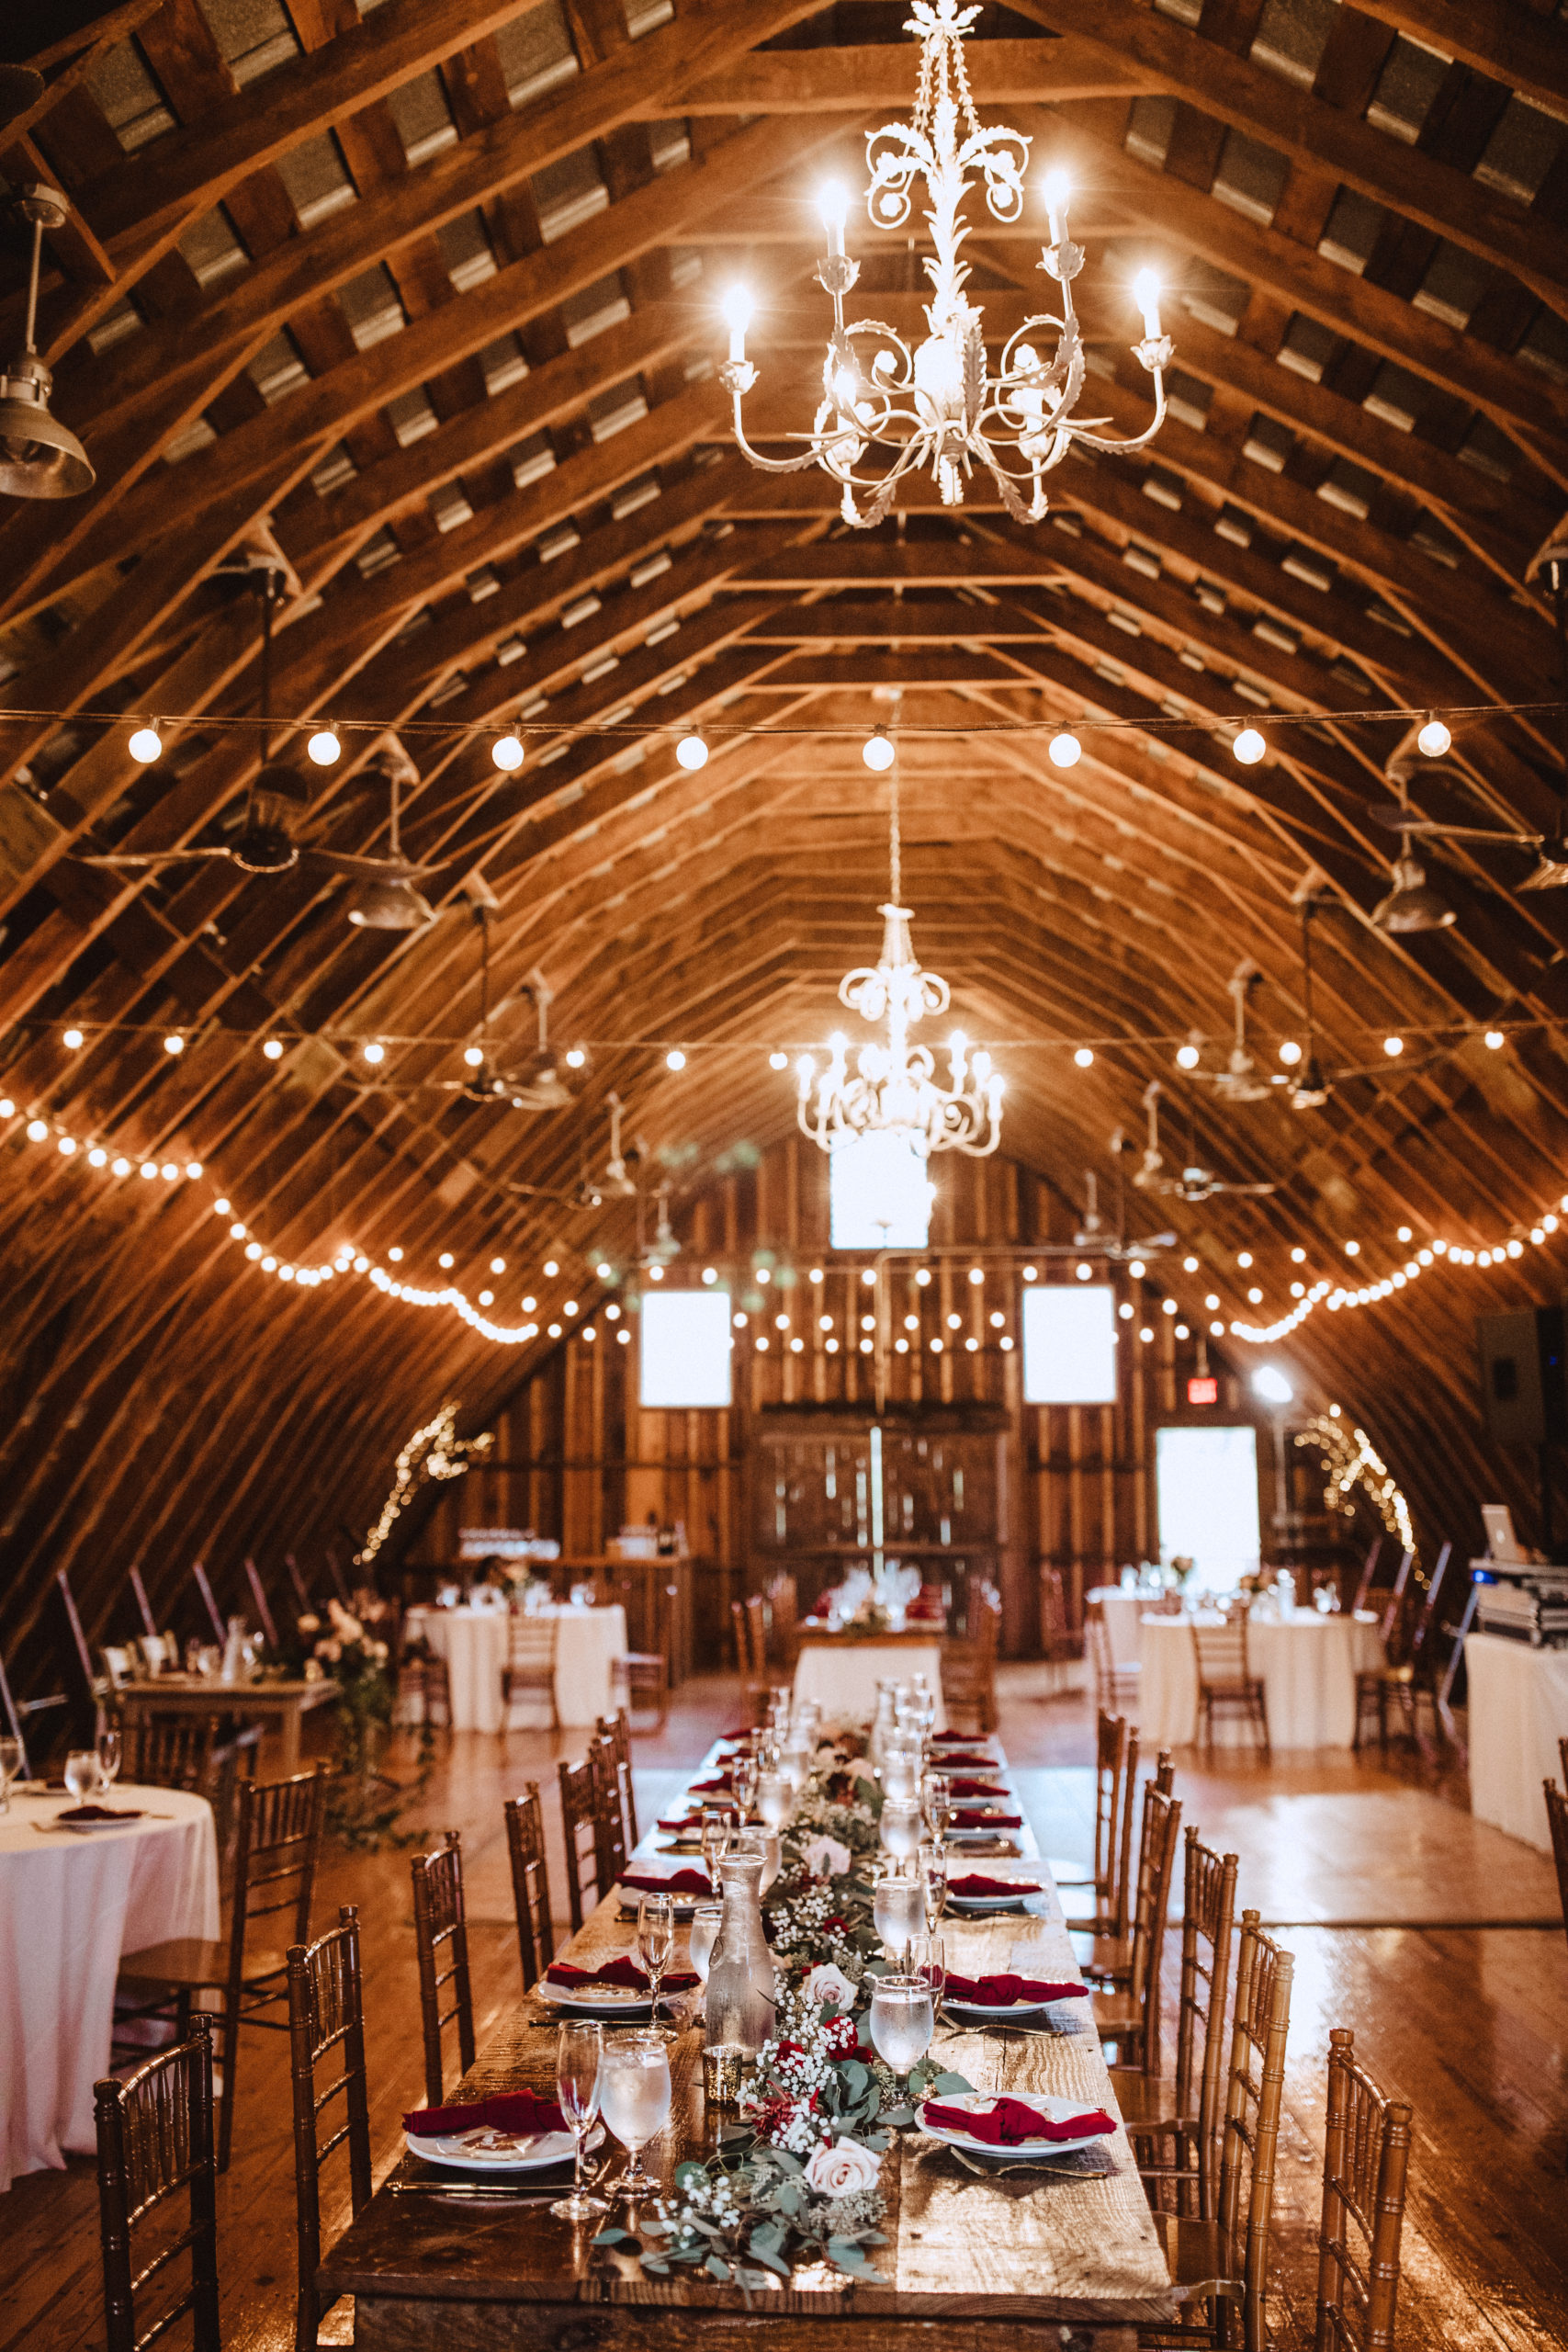 East Lynn Farm hayloft set up for a wedding with farm tables